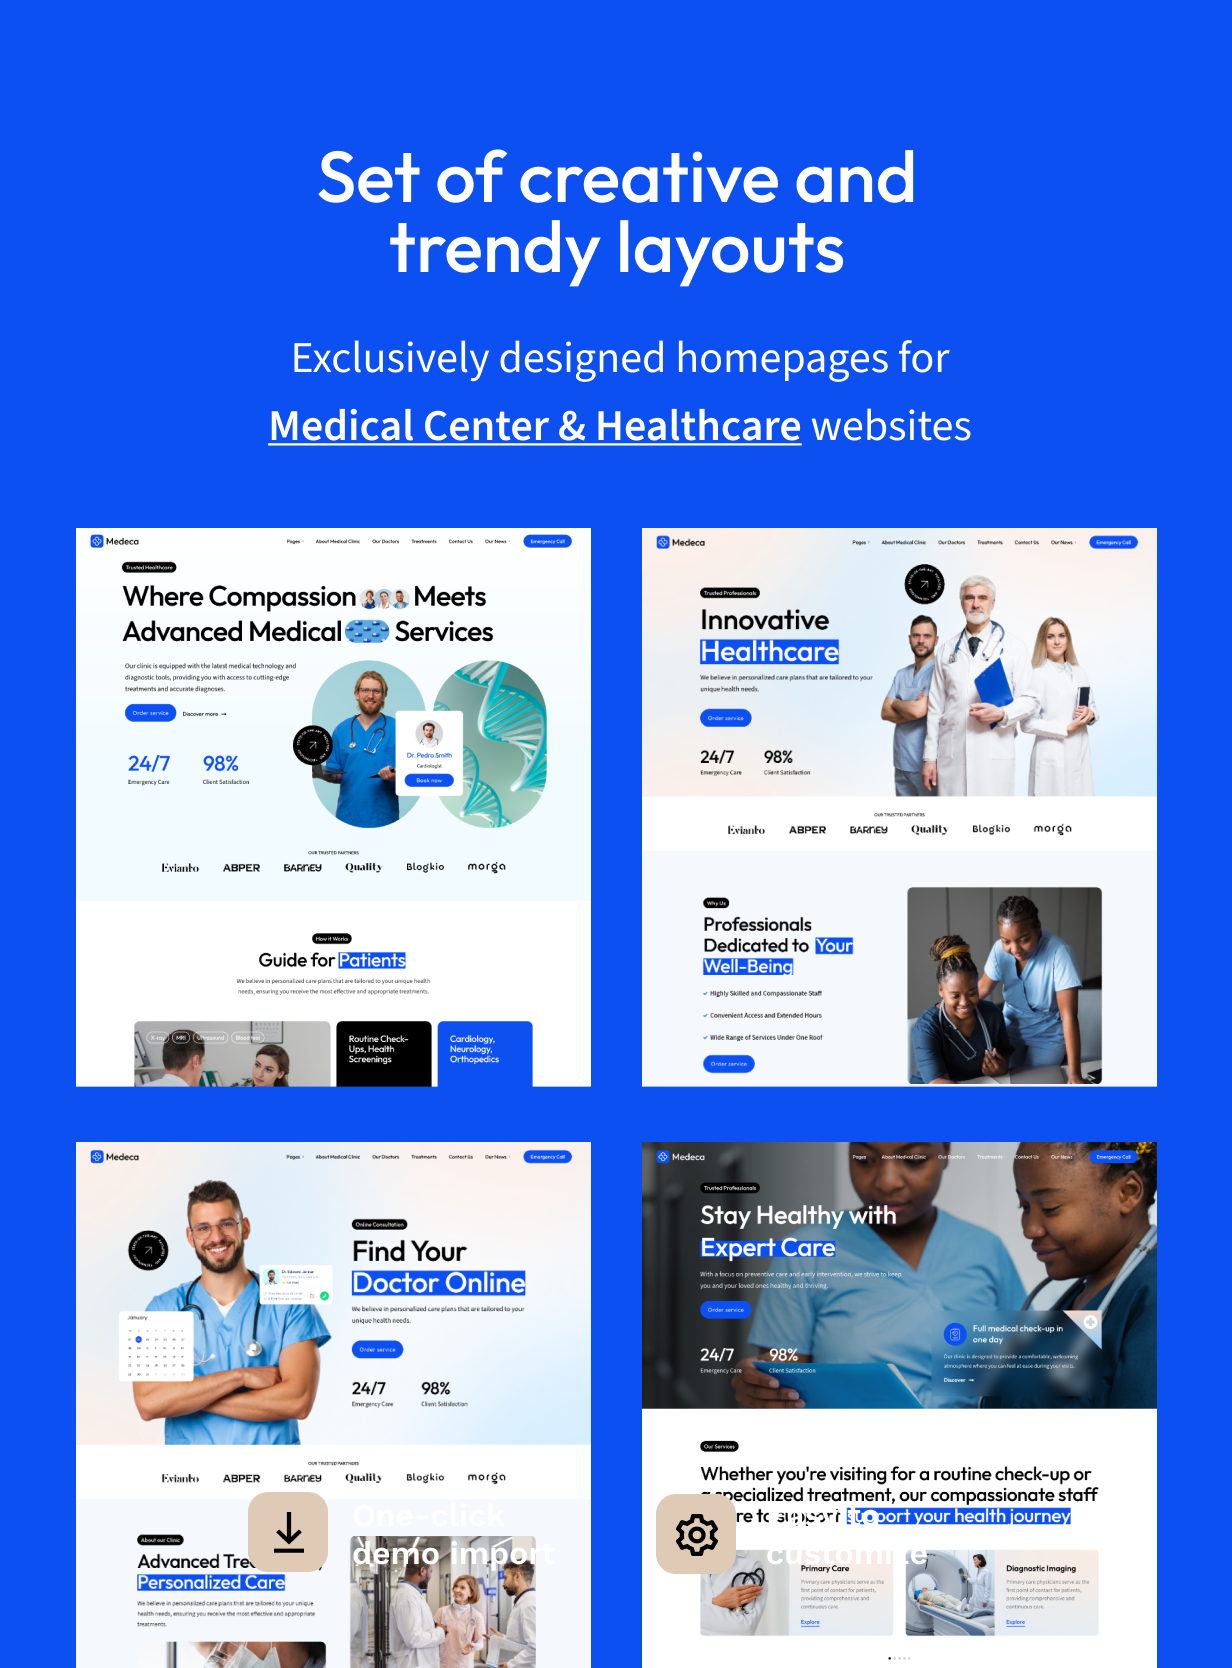 Medeca - Medical Center & Healthcare WordPress Theme